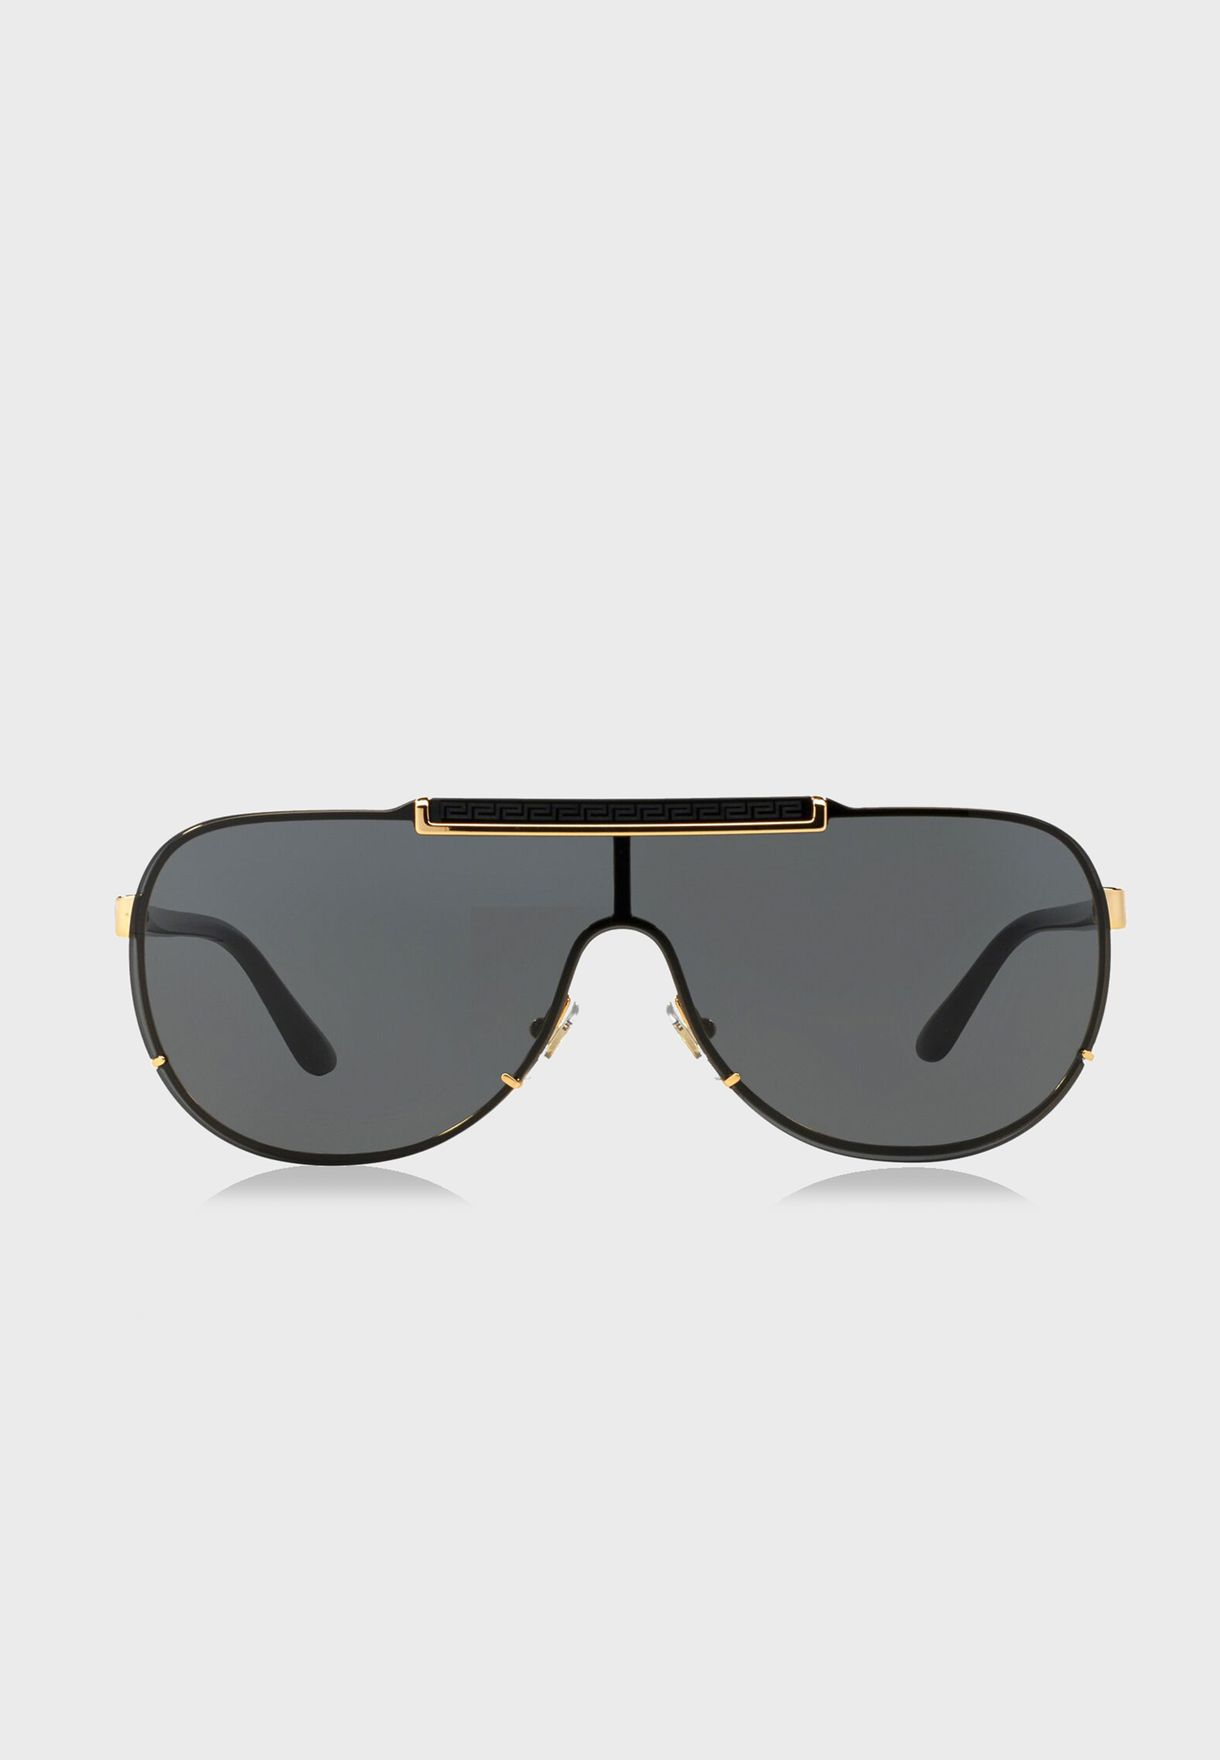 versace black sunglasses